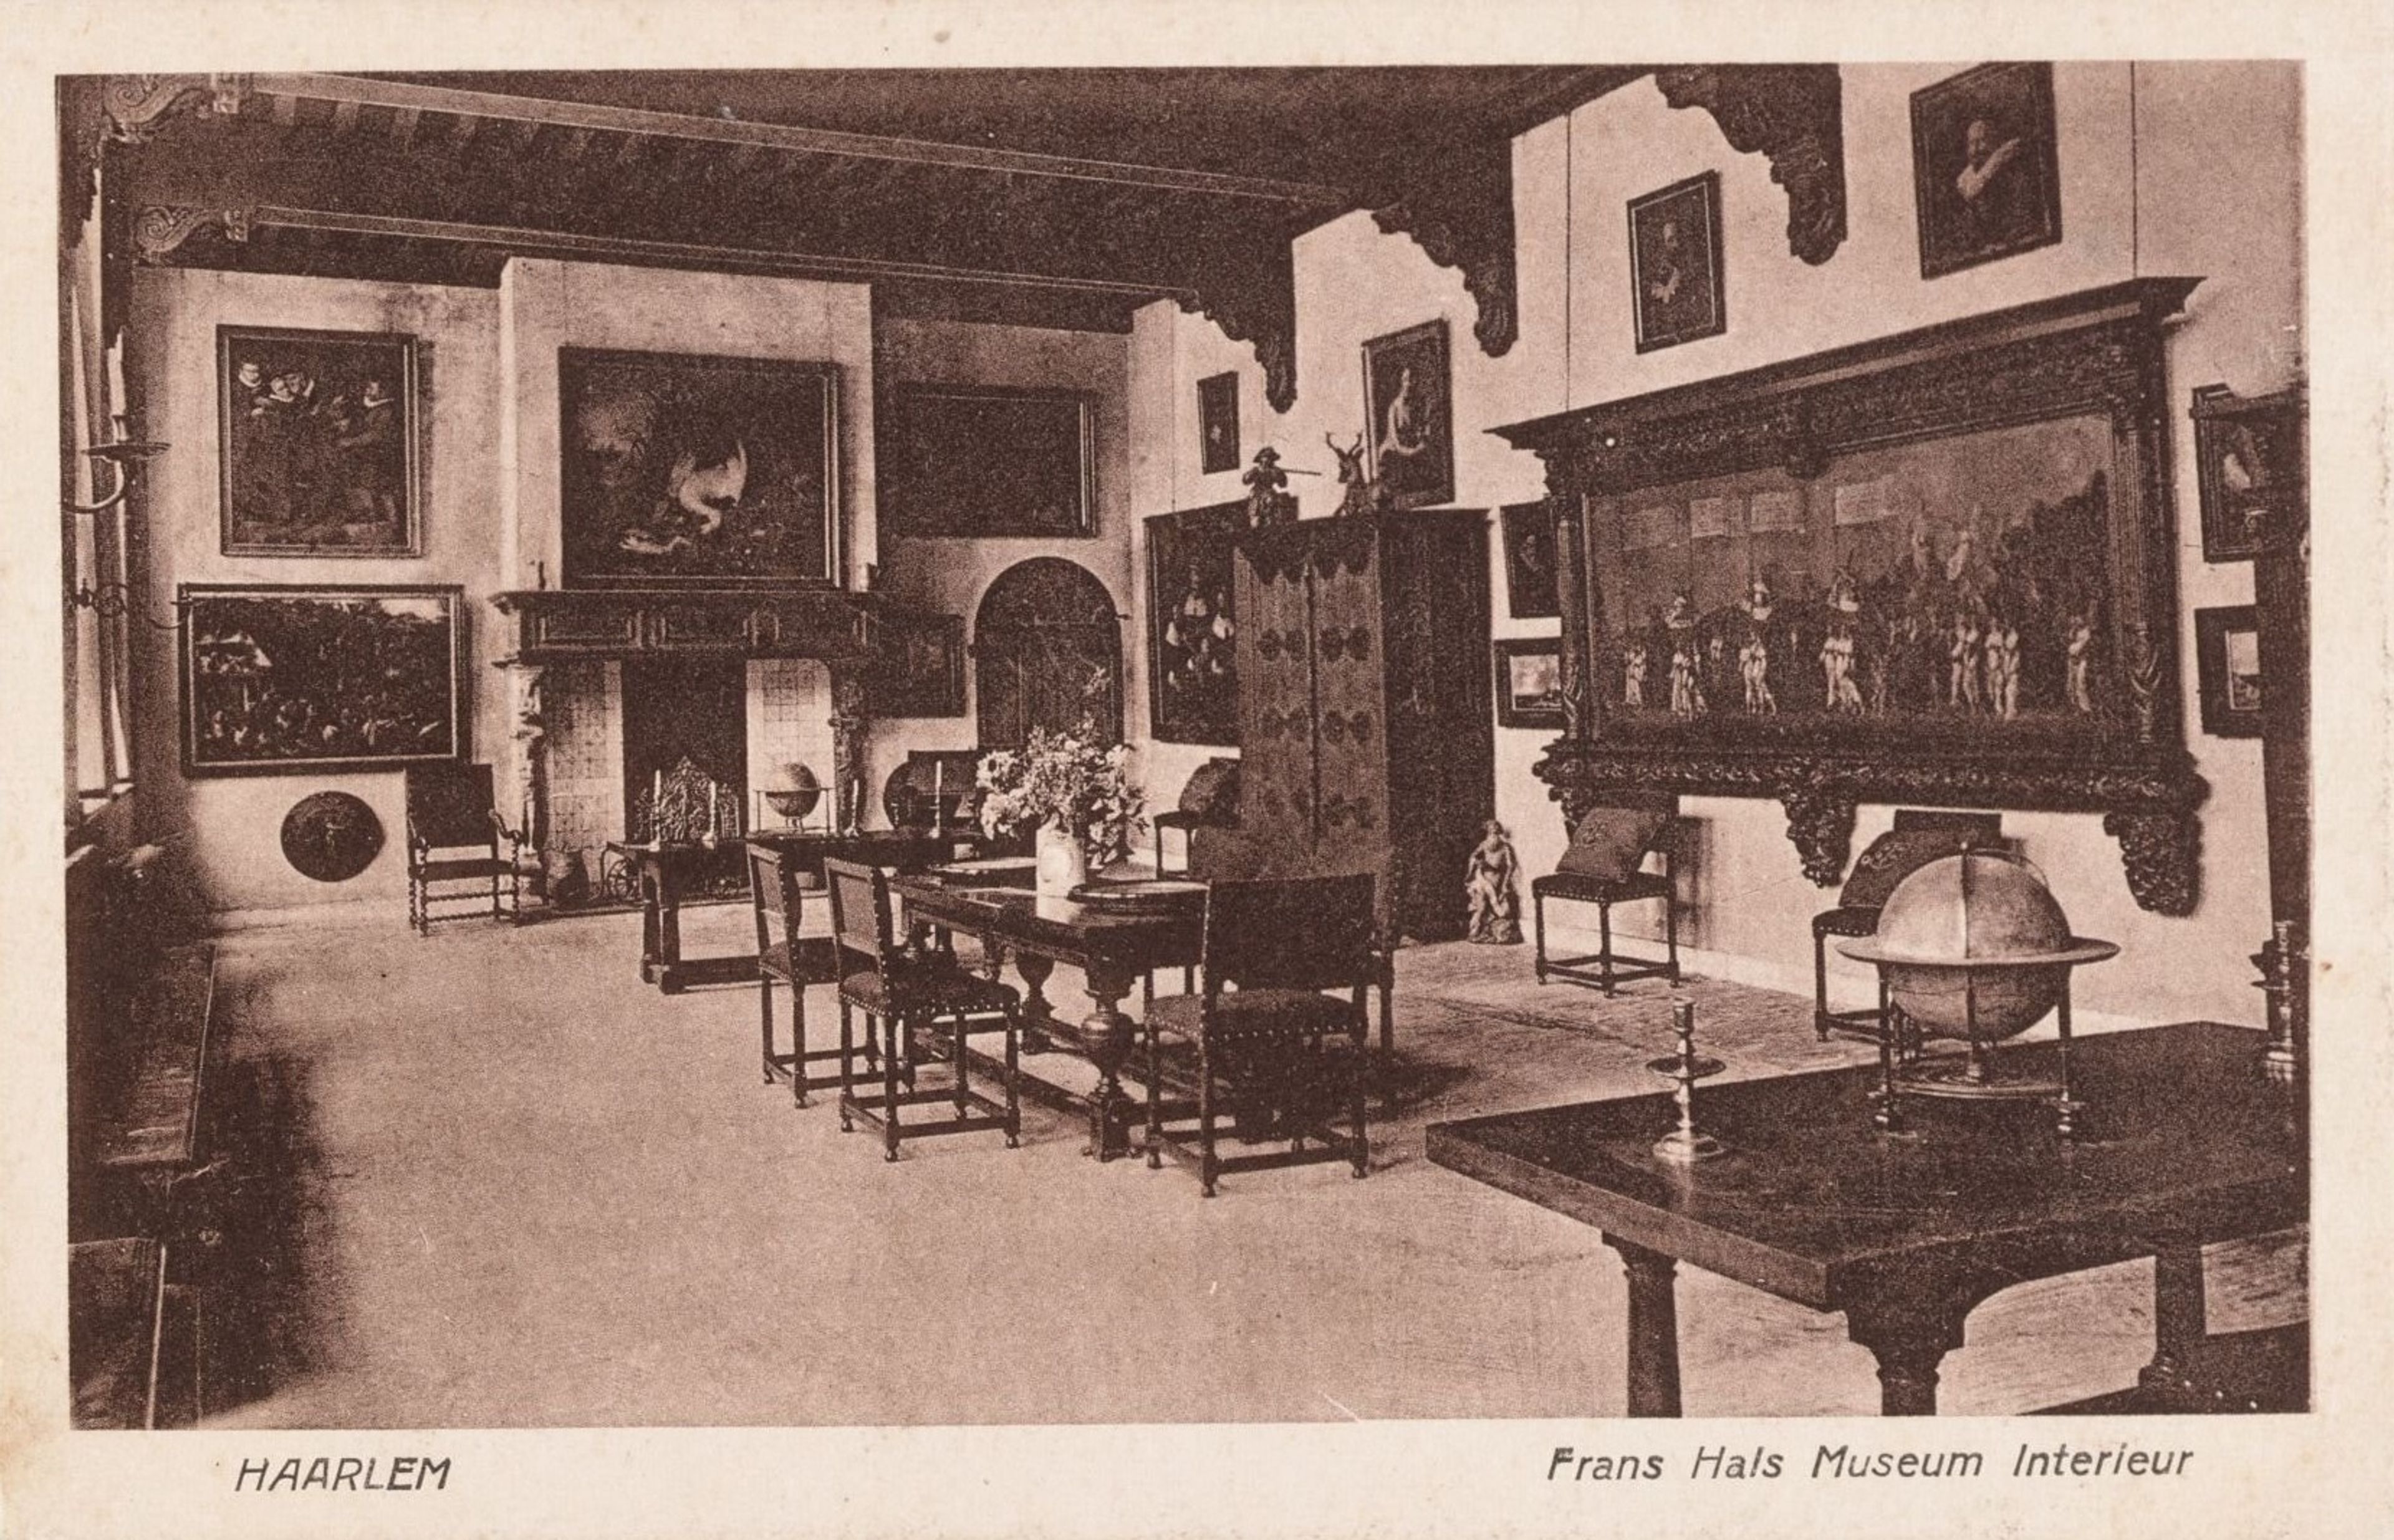 Frans Hals Museum interior in the 20th century.